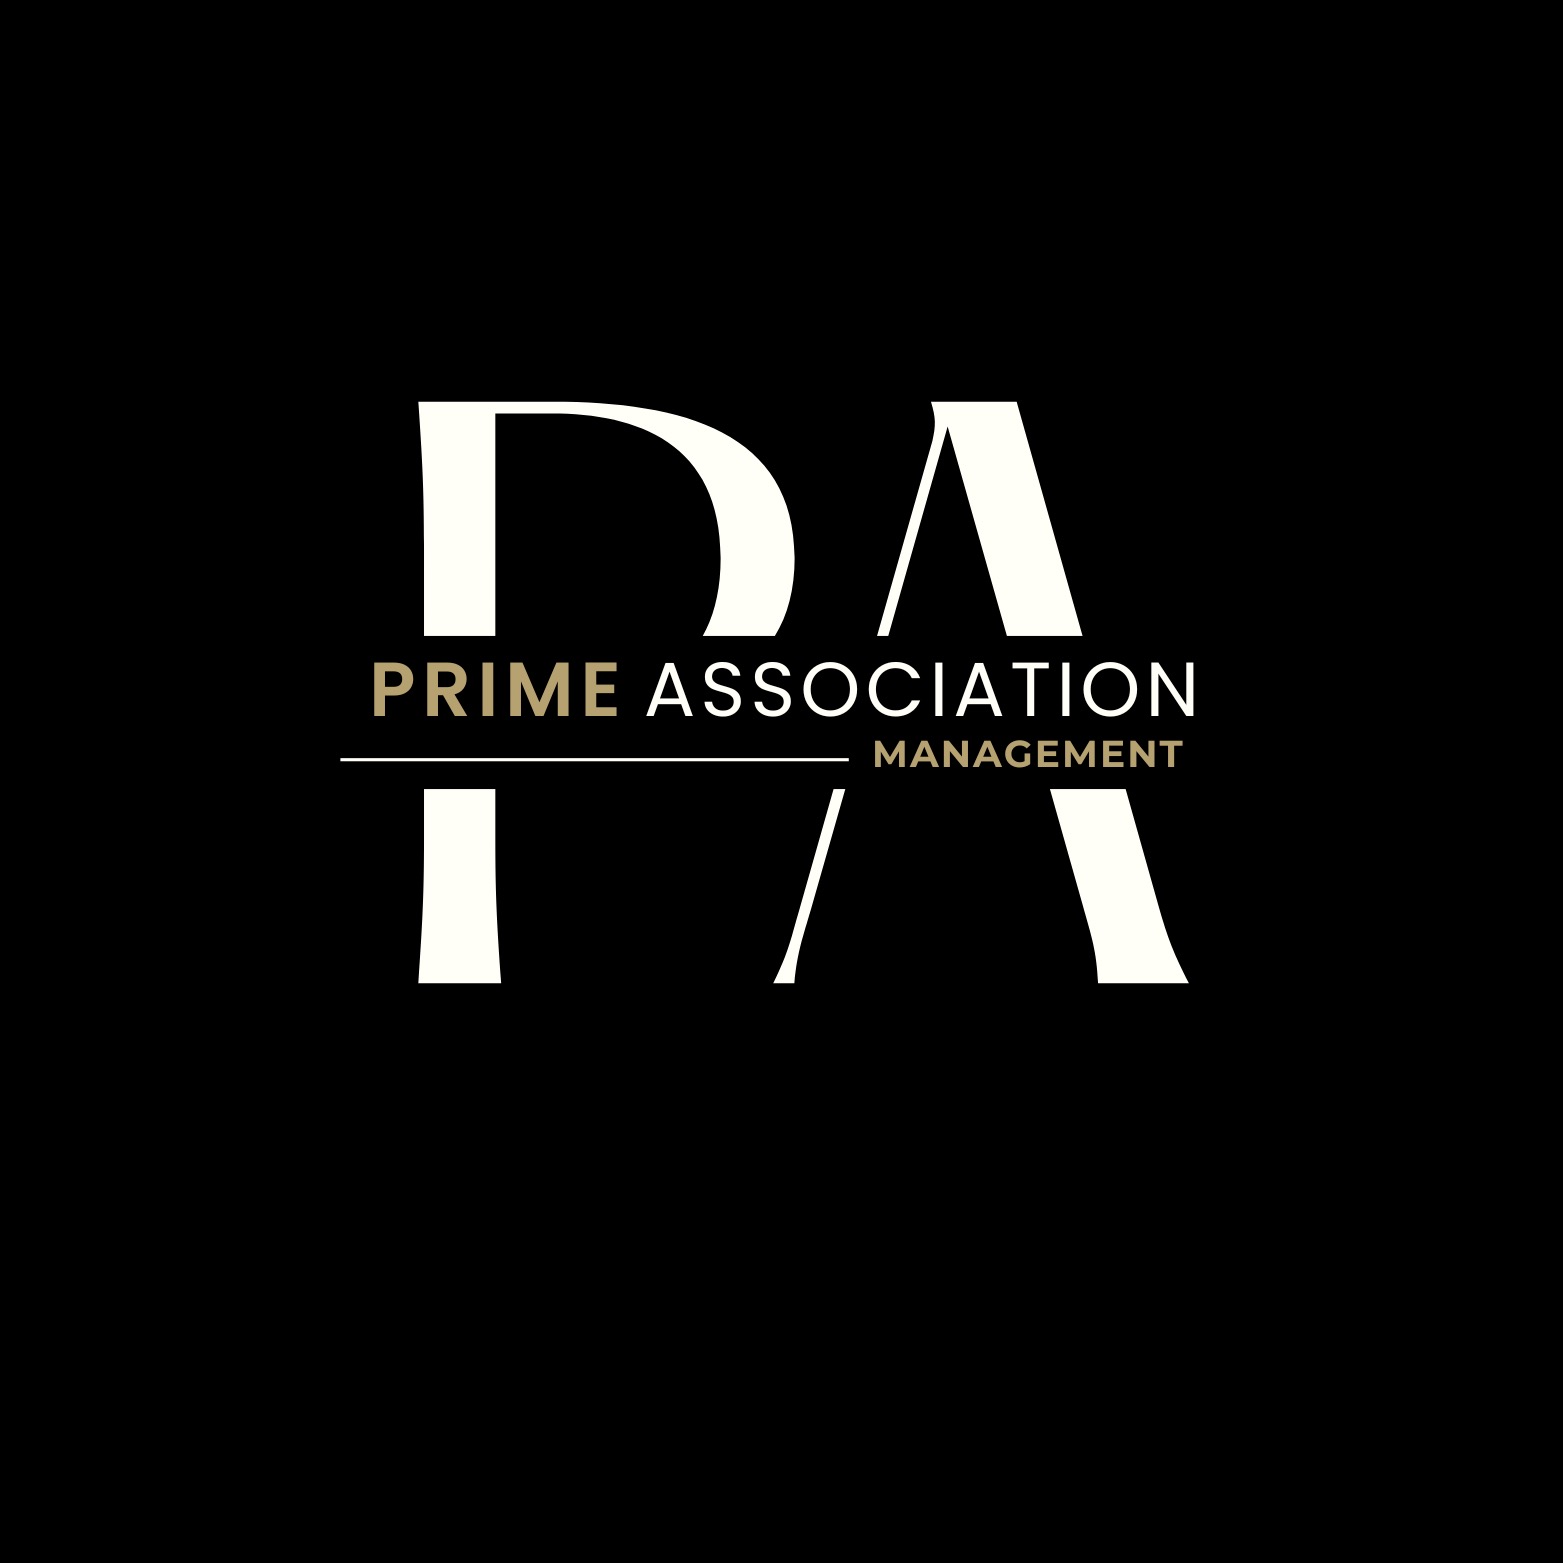 Prime Association Management logo